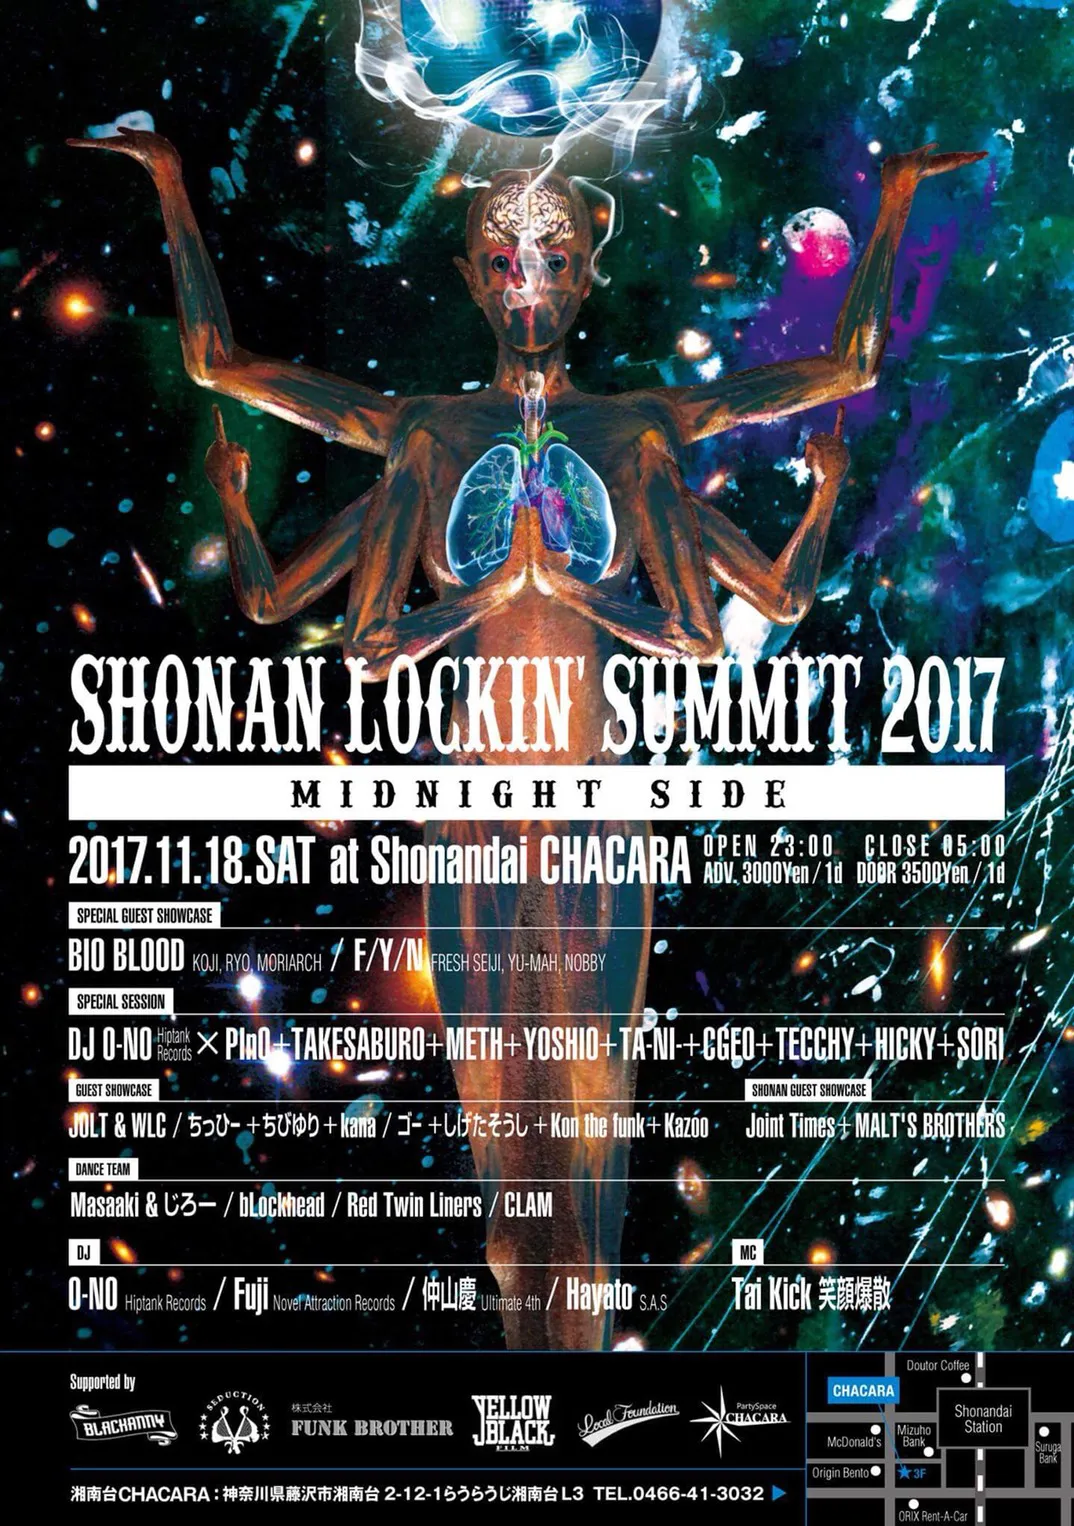 SHONAN LOCKIN' SUMMIT 2017 -MIDNIGHT SIDE-